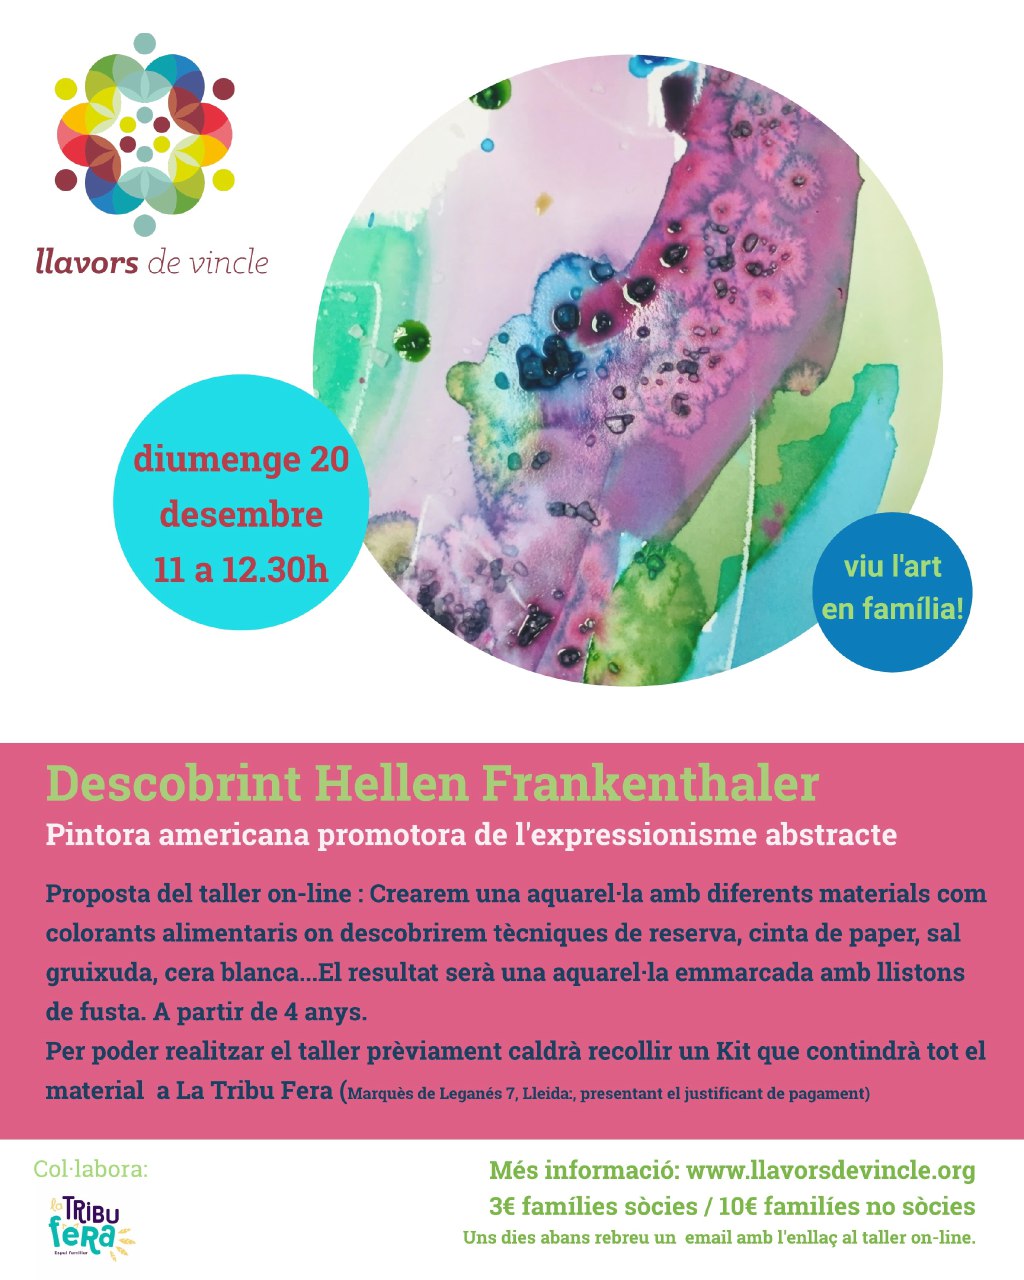 Descobrint Hellen Frankenthaler